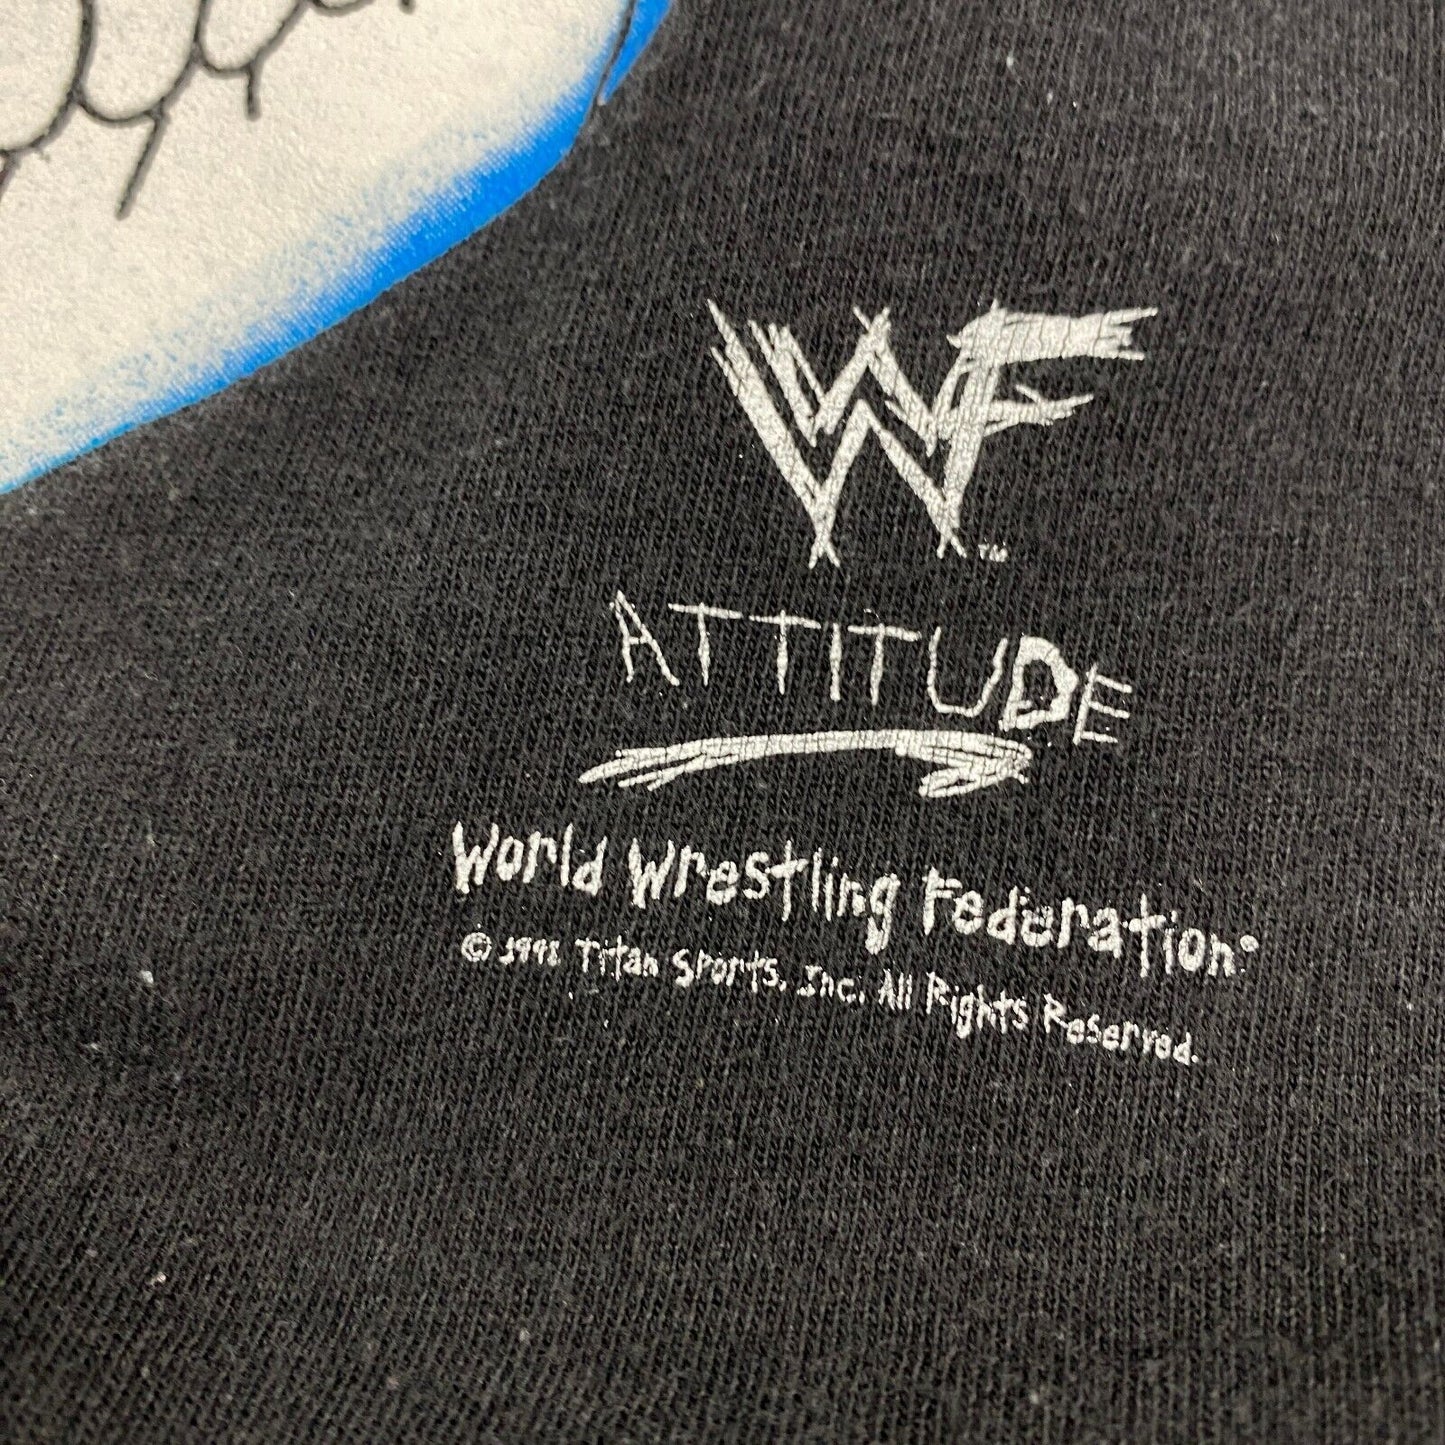 VINTAGE 90s WWF Attitude Stone Cold 3:16 Wrestling T-Shirt sz Small Men Adult